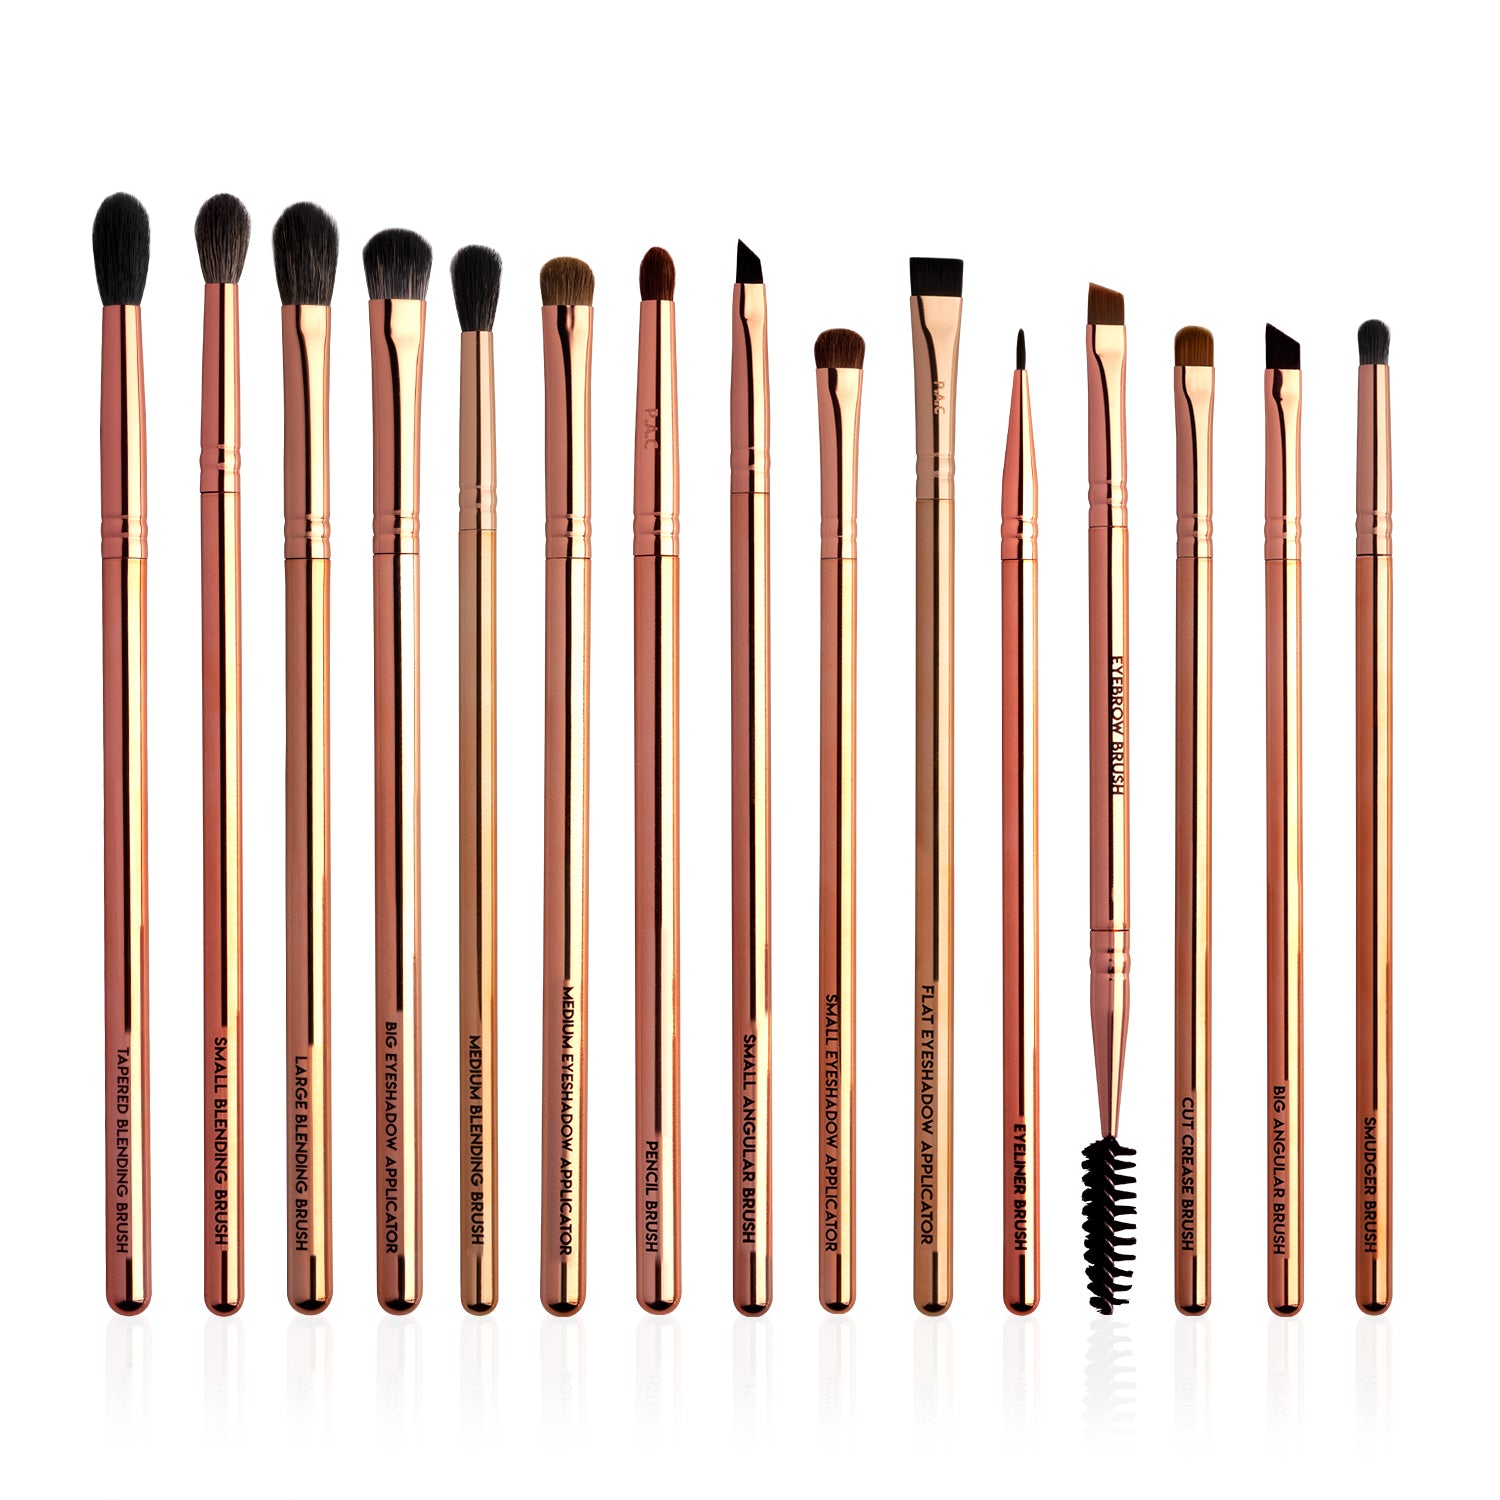 PAC Cosmetics Eyeconic Brush Kit (15 Brushes)